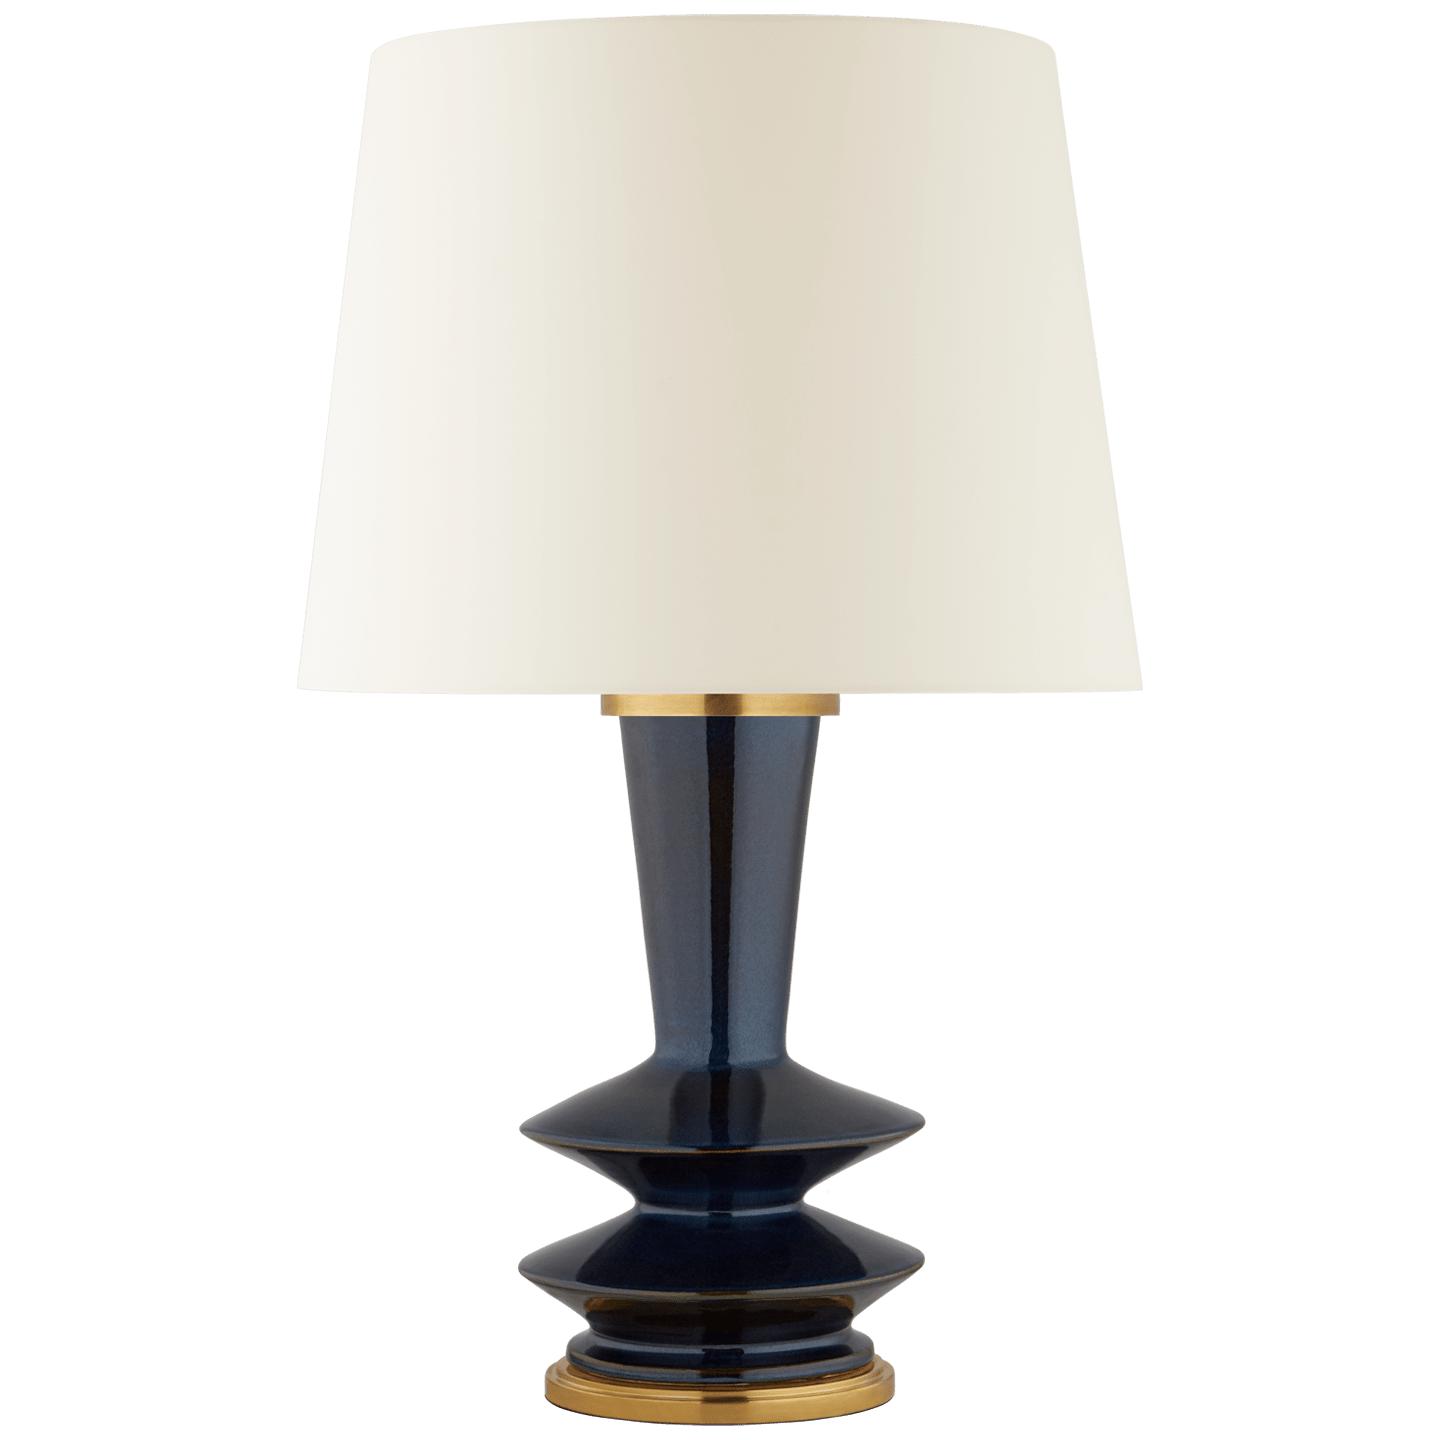 Купить Настольная лампа Whittaker Medium Table Lamp в интернет-магазине roooms.ru